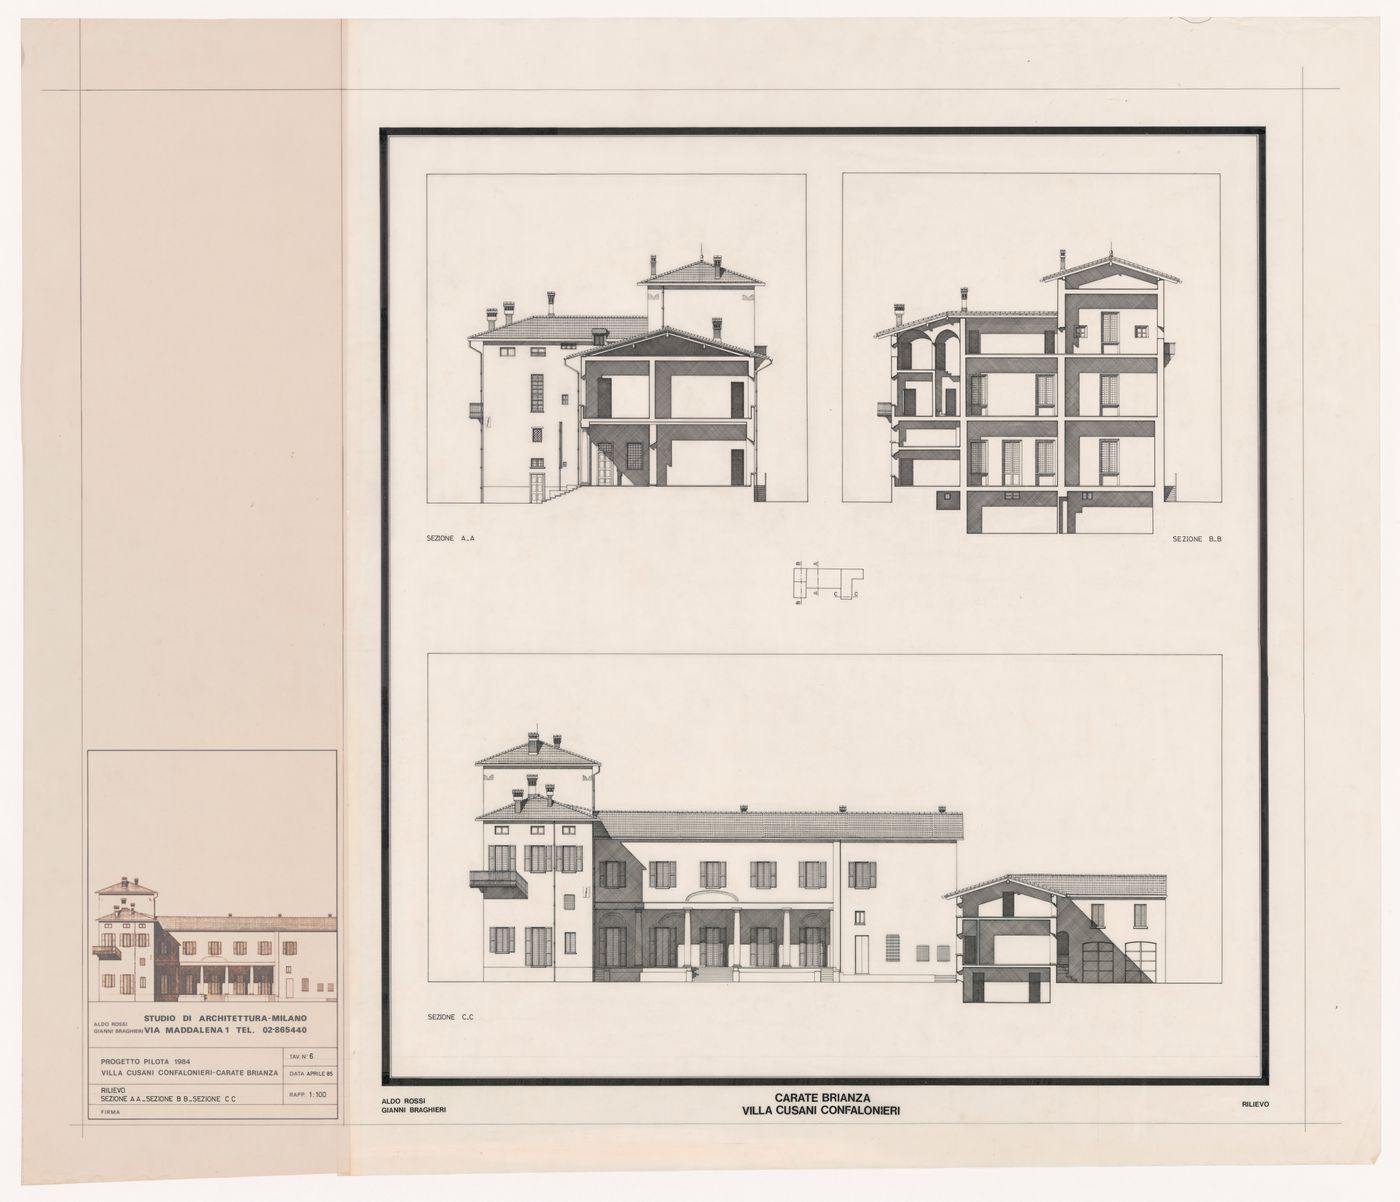 Sections for Villa Cusani Confalonieri, Carate Brianza, Italy